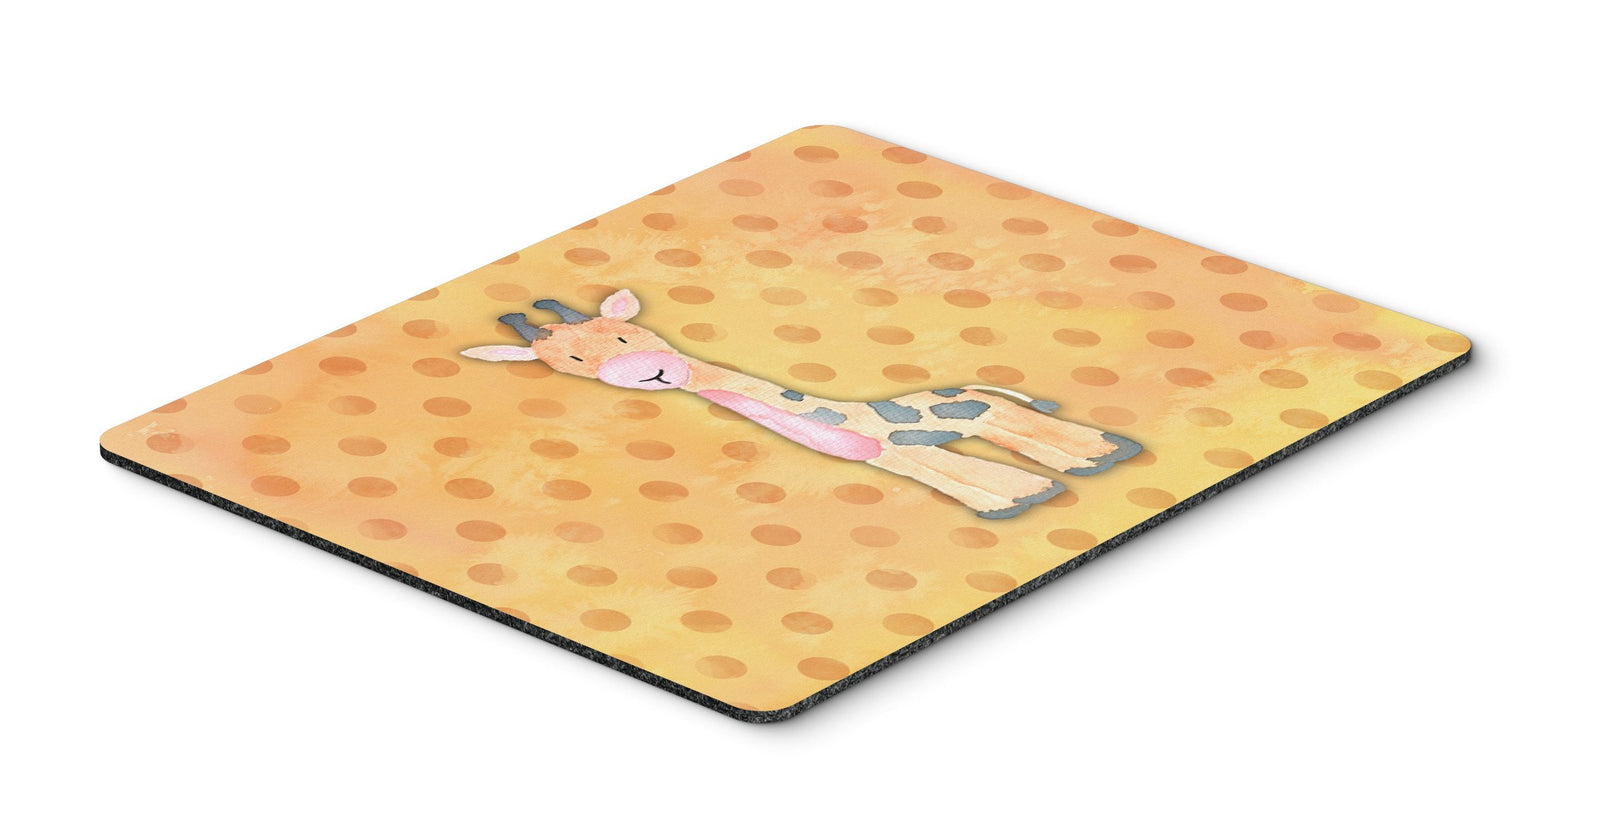 Polkadot Griaffe Watercolor Mouse Pad, Hot Pad or Trivet BB7373MP by Caroline's Treasures